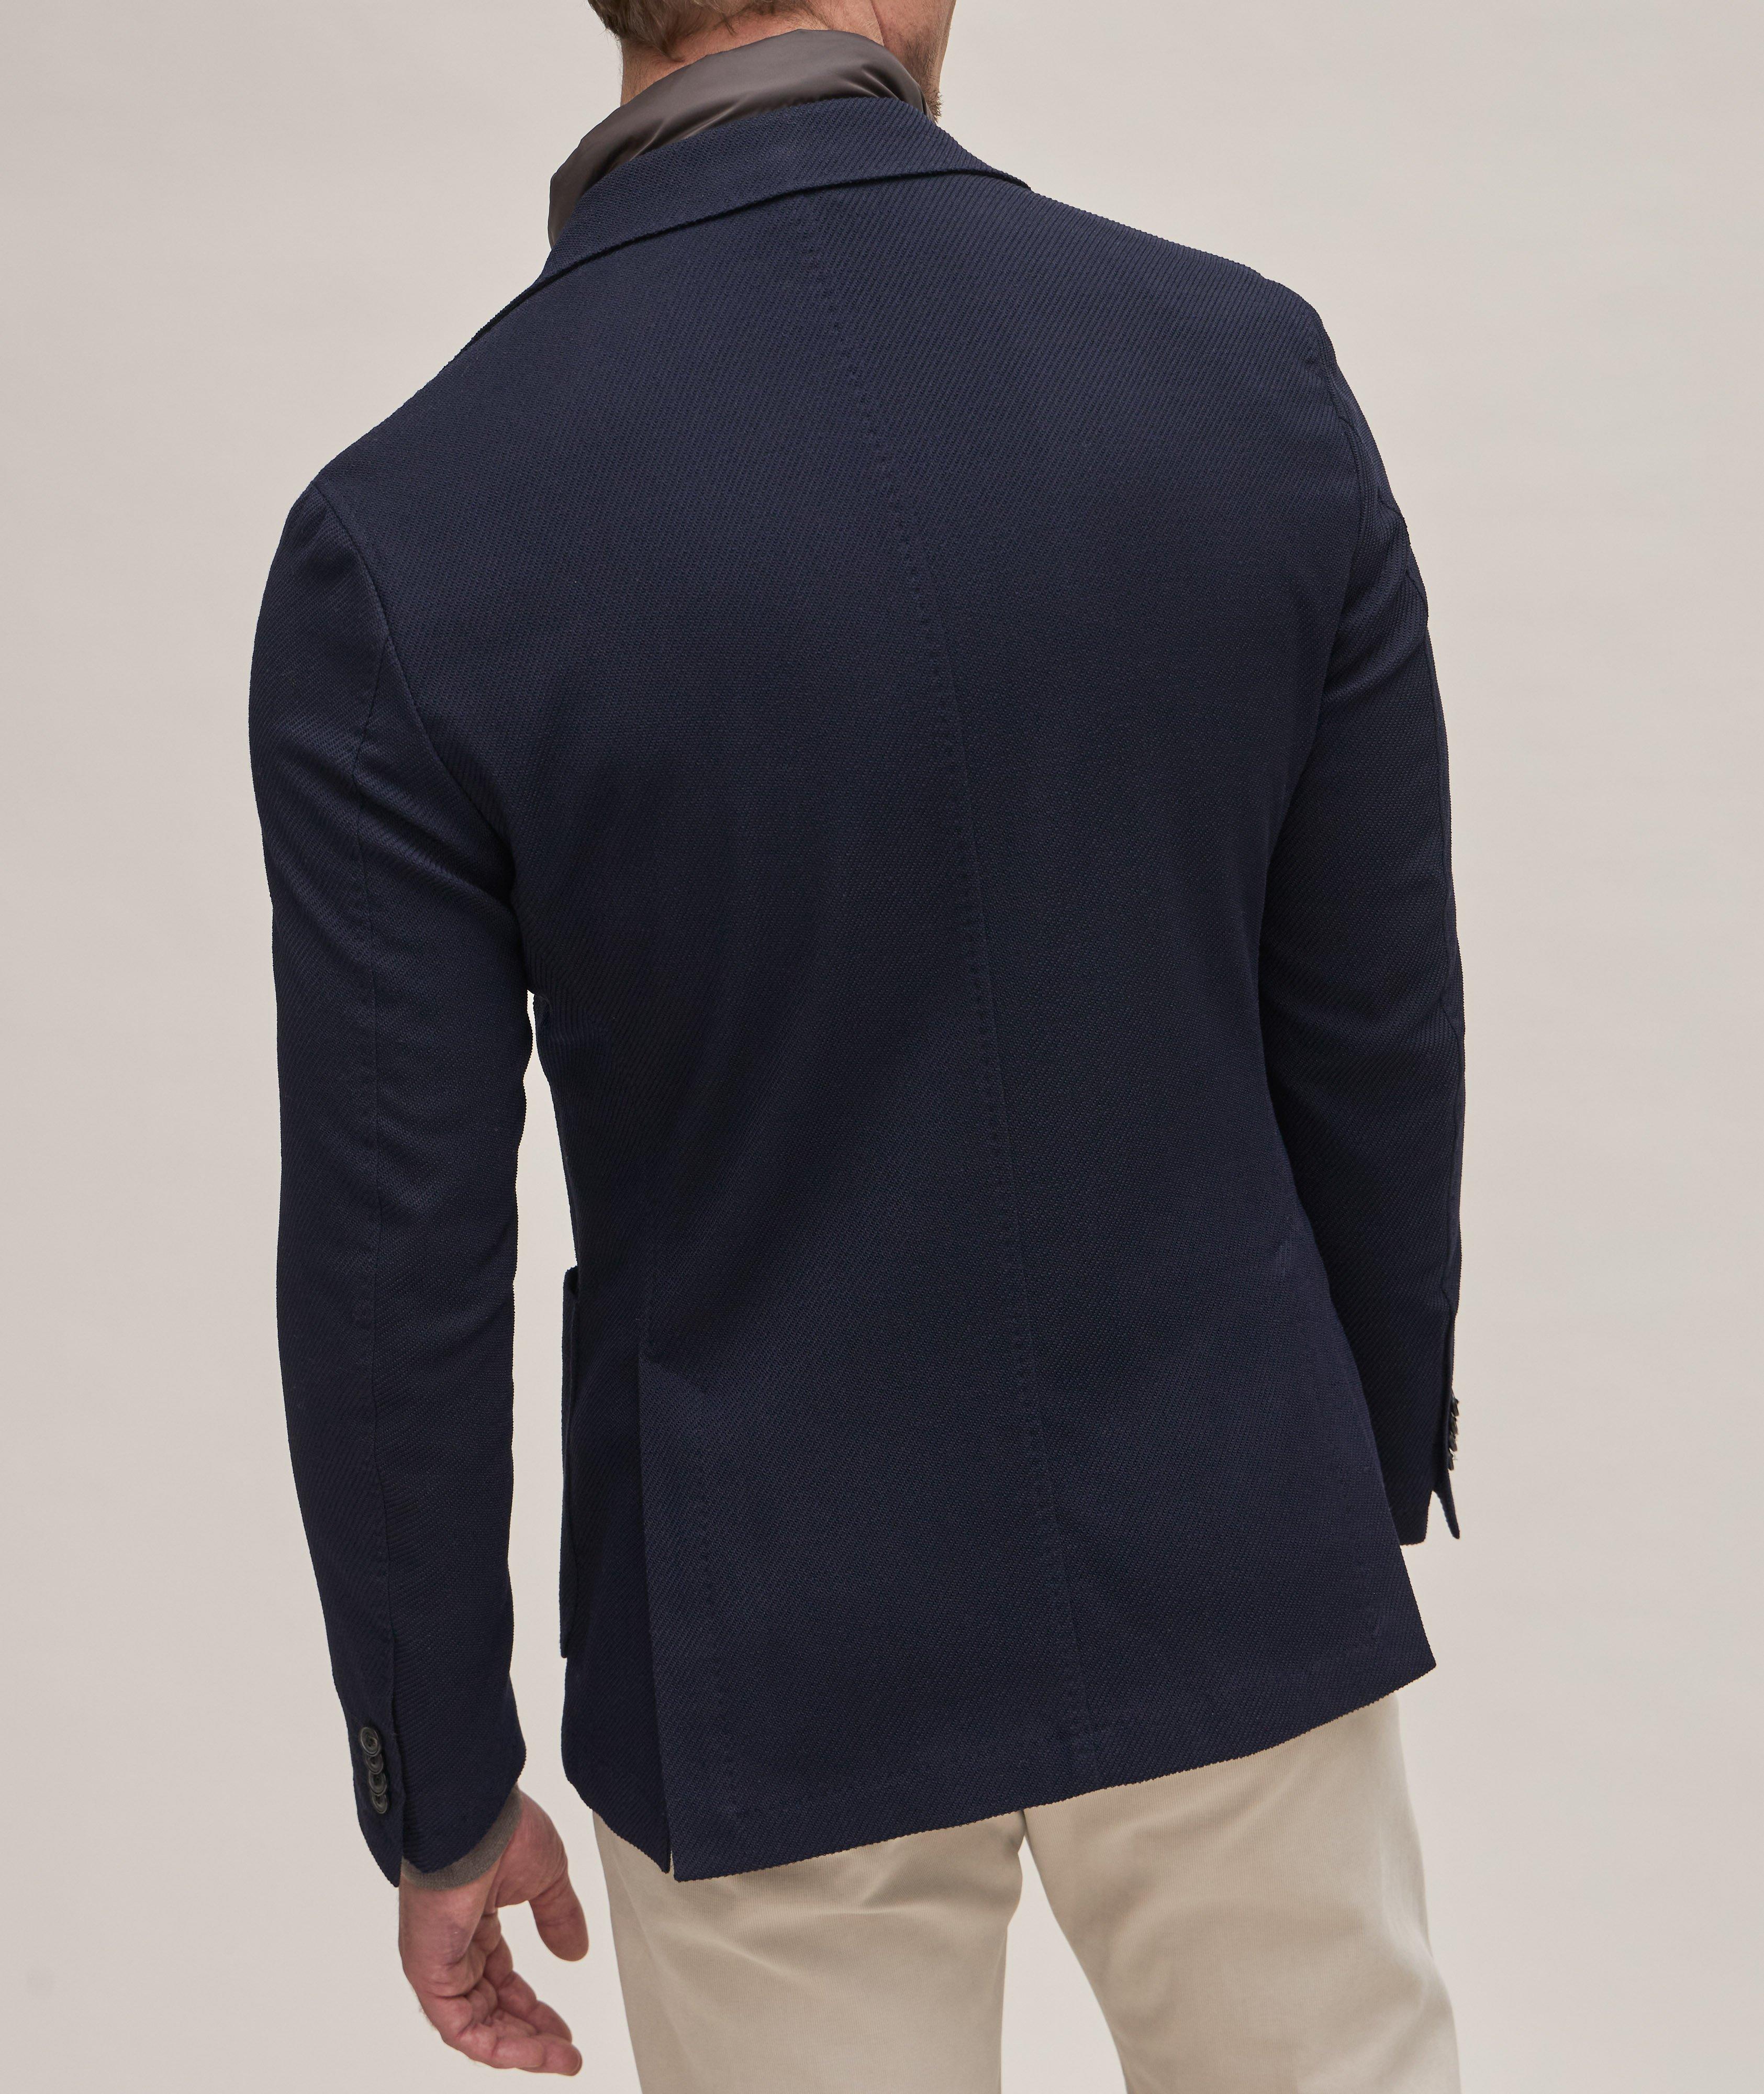 Triest Textured Stretch Wool-Cotton Blend Sport Jacket image 2